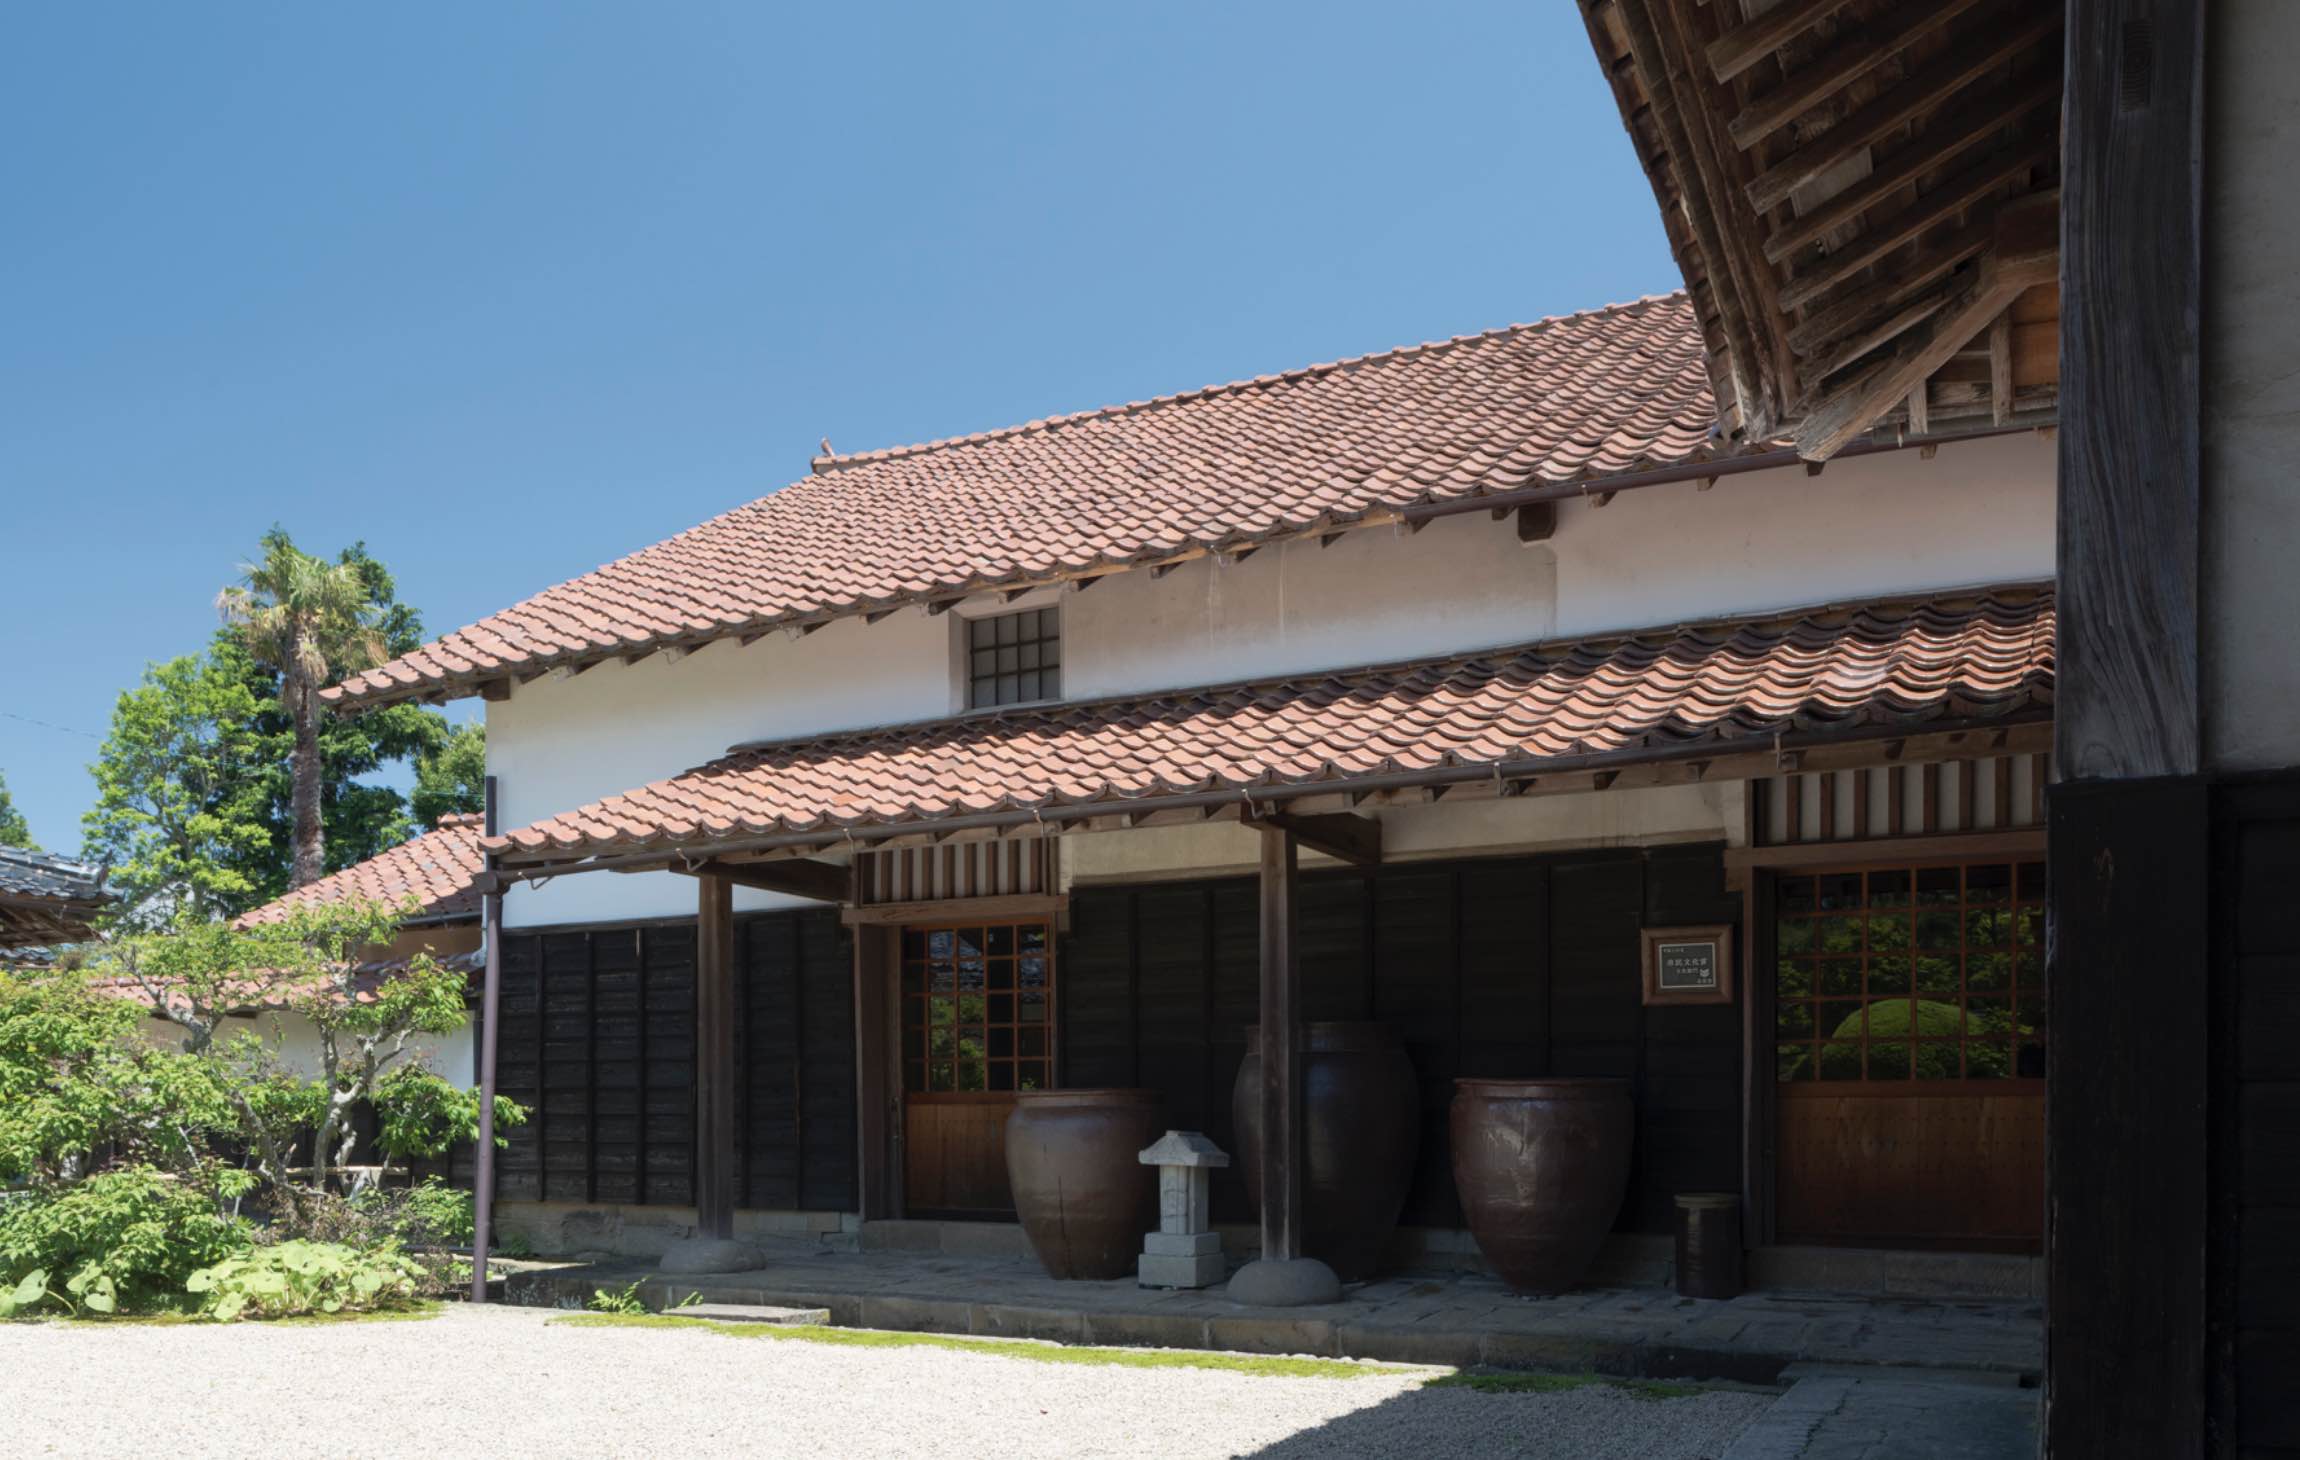 the photo of Izumo Folk Crafts Museum